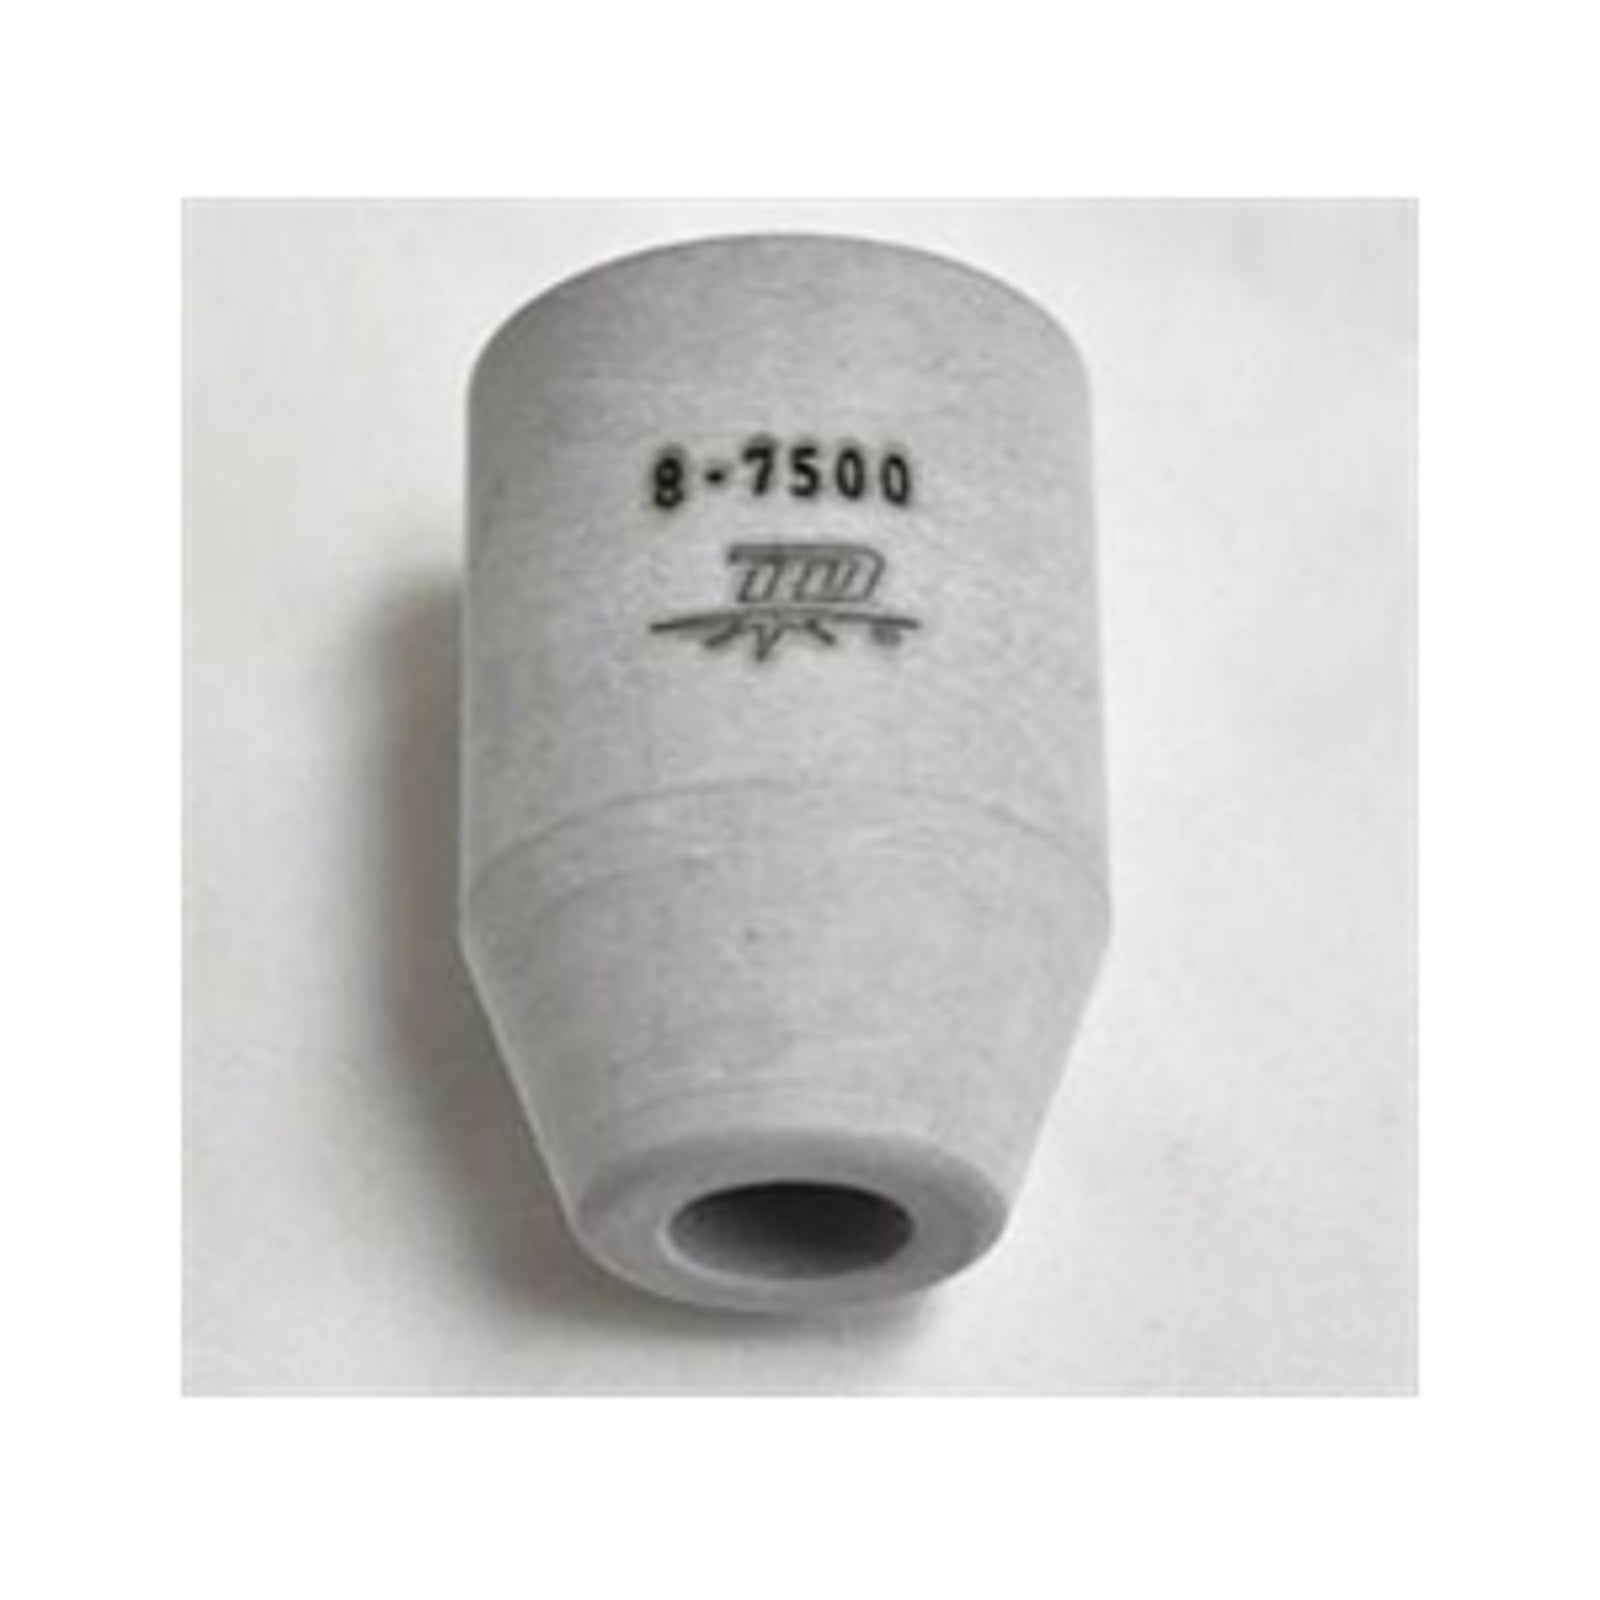 Thermal Dynamics PCH/M-62 Standard Shield Cup (8-7500)